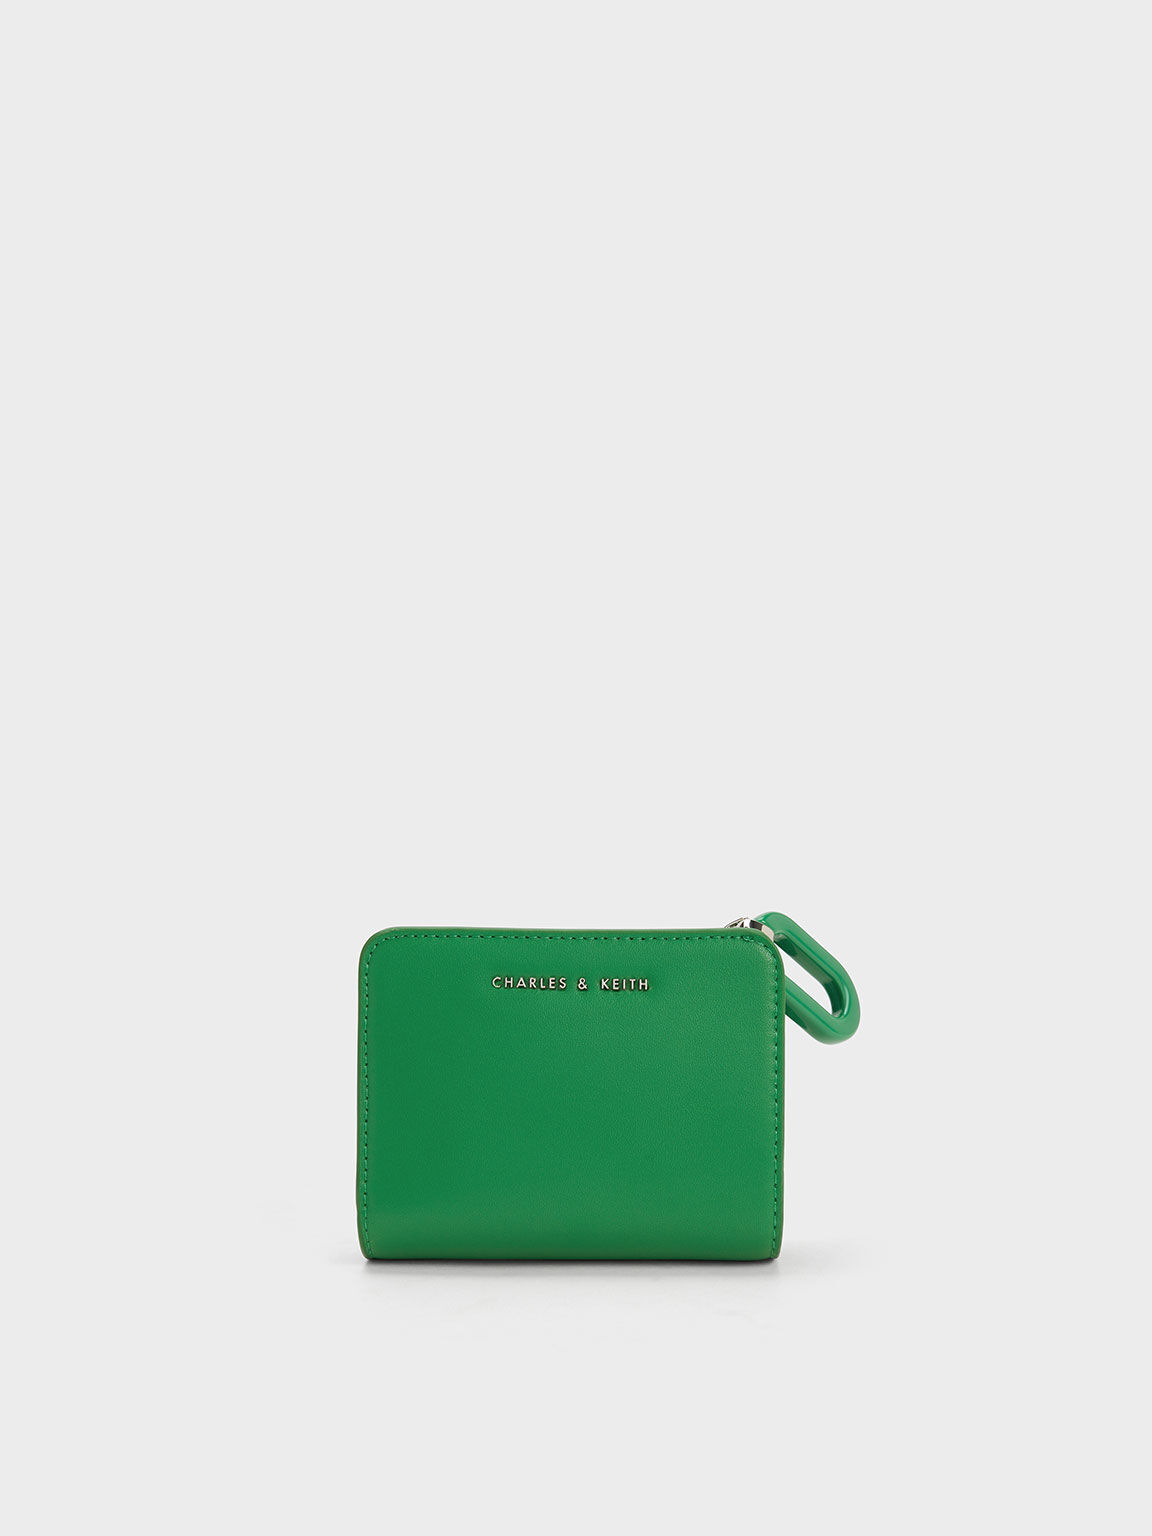 Buy Alexvyan Green Women's Purse Wallet Female Clutch Bag  Women/Ladies/Girls Wallets Long Purses Card Holder Phone Pocket at Amazon.in